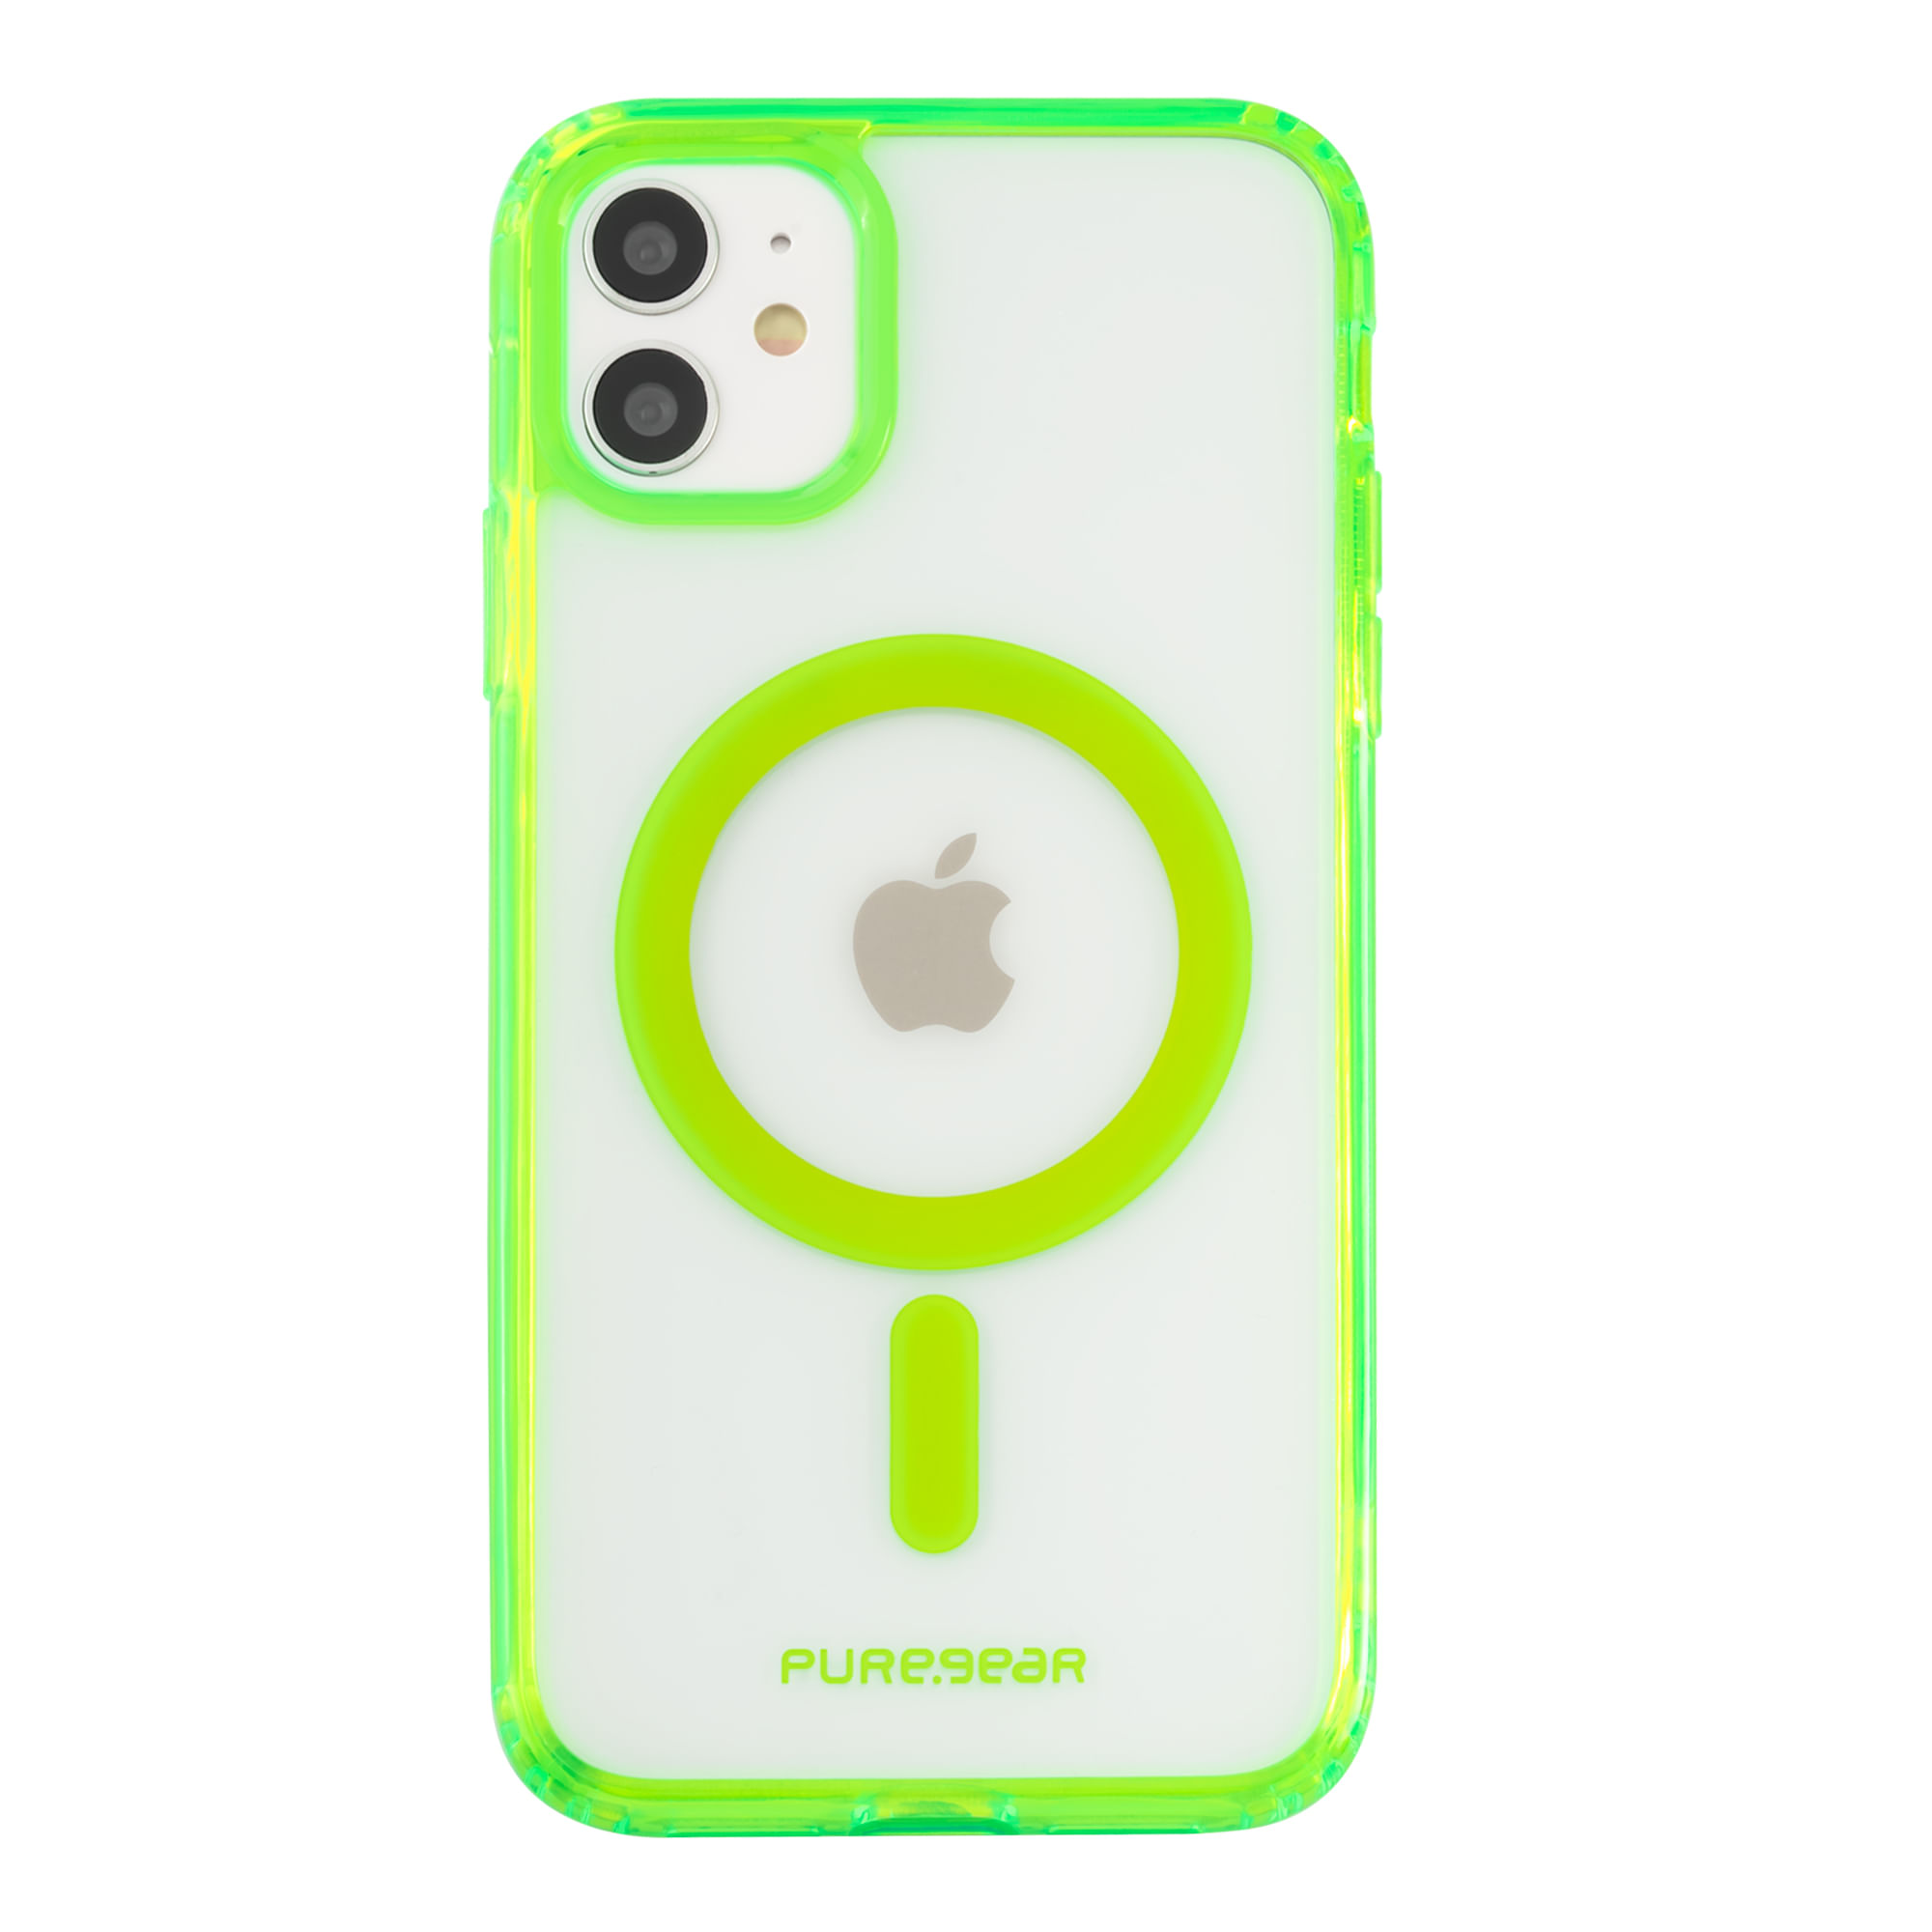 ShieldCase ShieldCase Funda transparente MagSafe iPhone Xr borde de color  (verde)